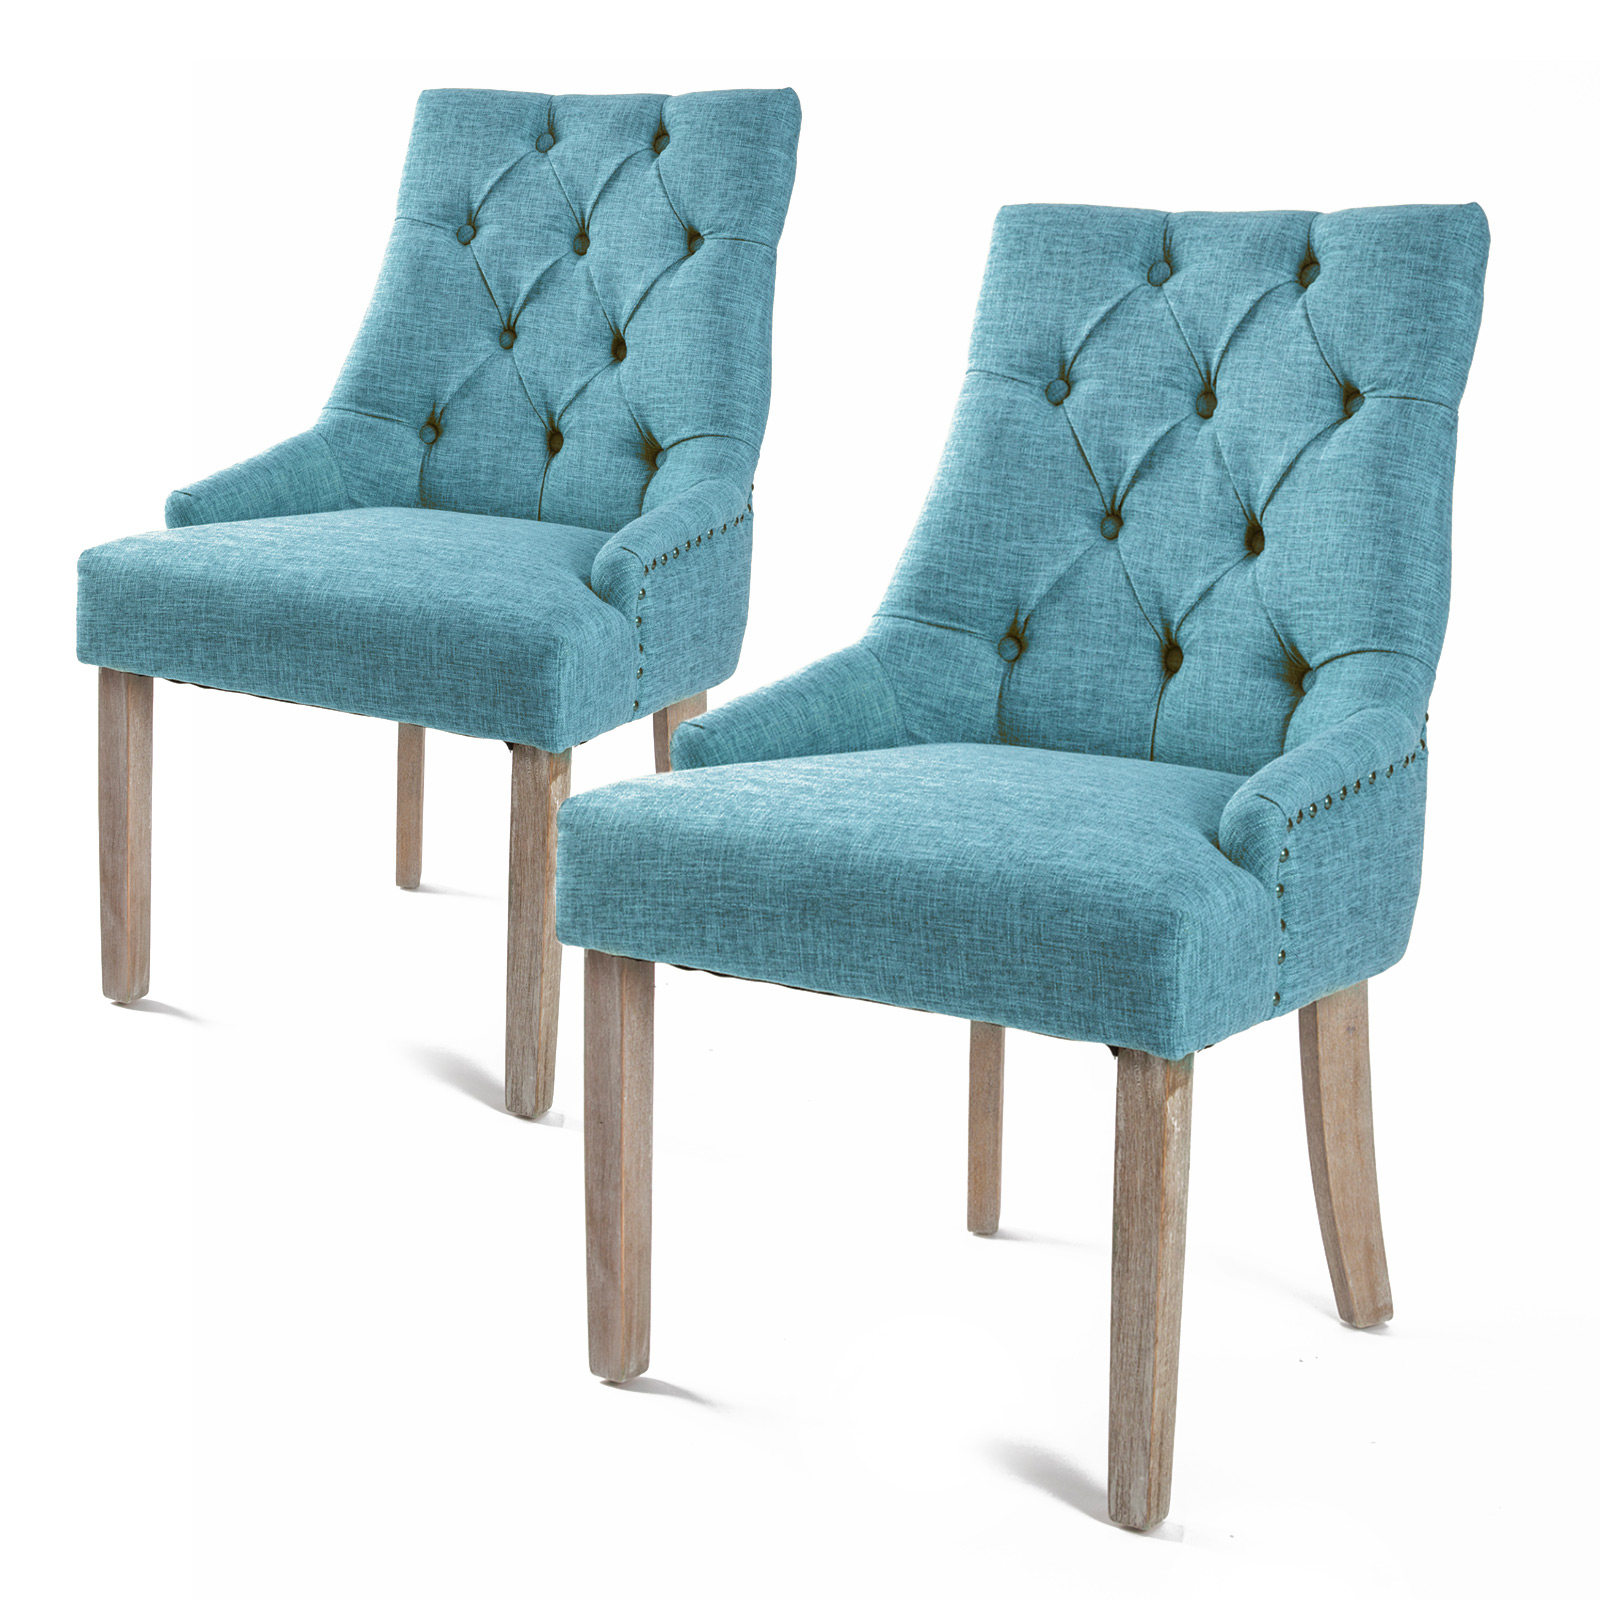 2X French Provincial Oak Leg Chair AMOUR - BLUE